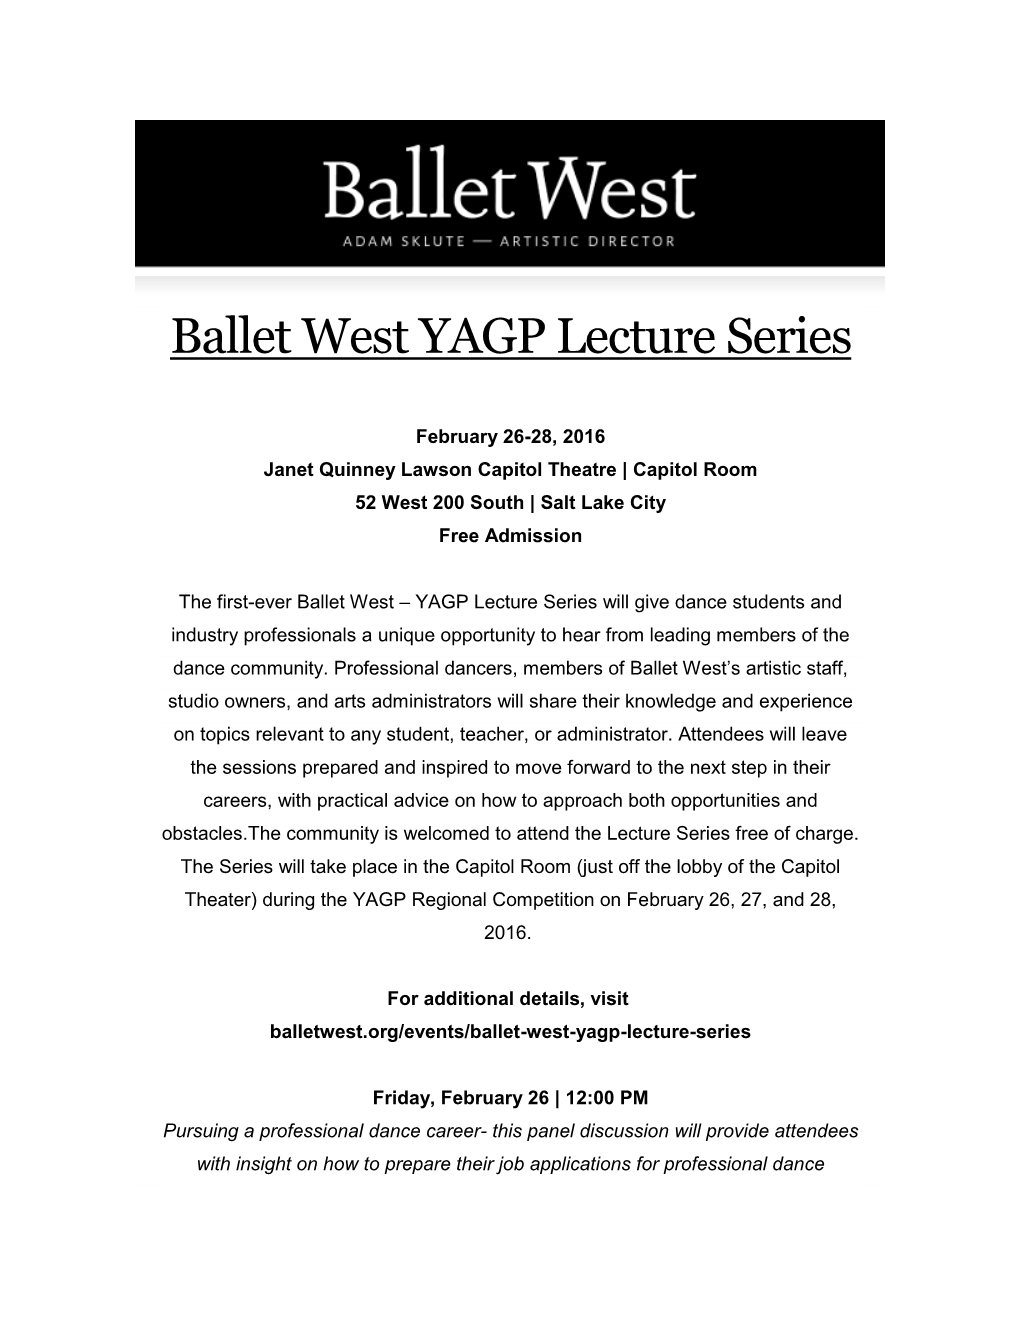 Ballet West YAGP Lecture Series